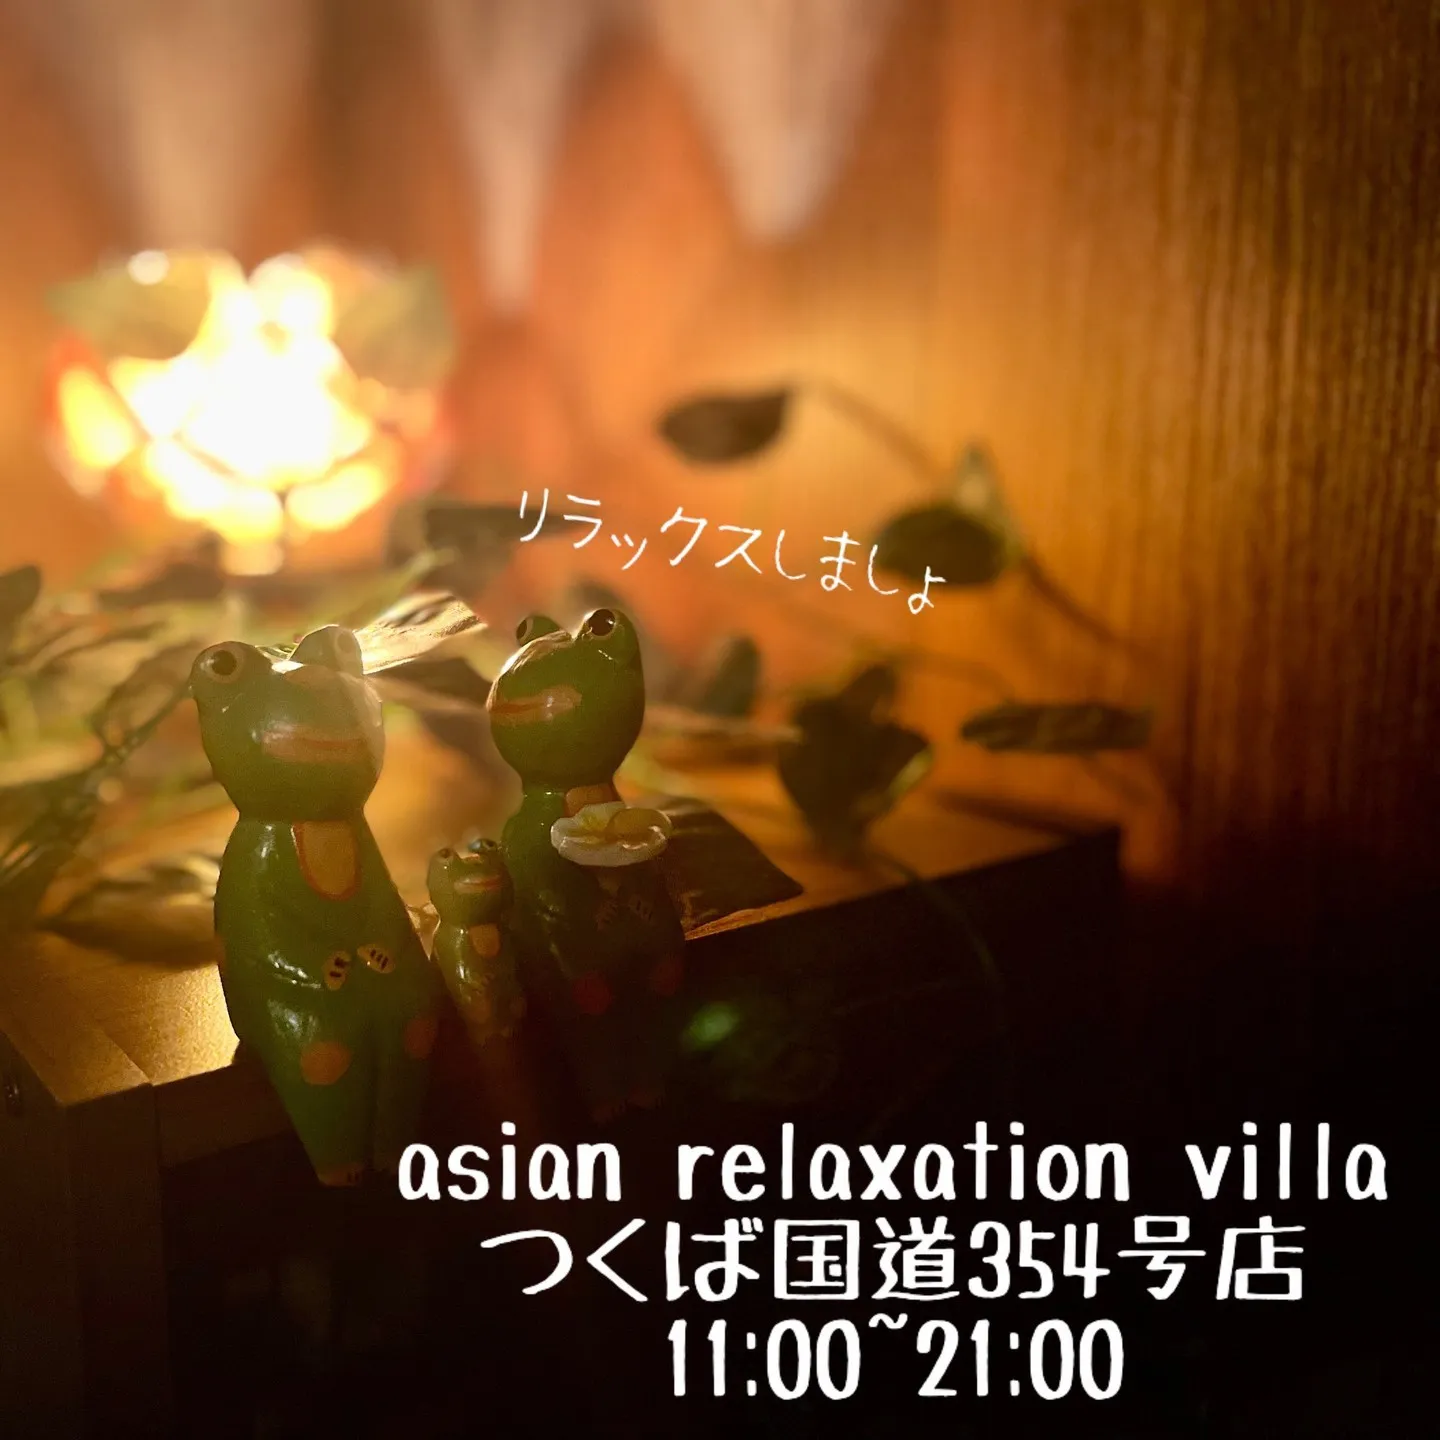 asian relaxation villa